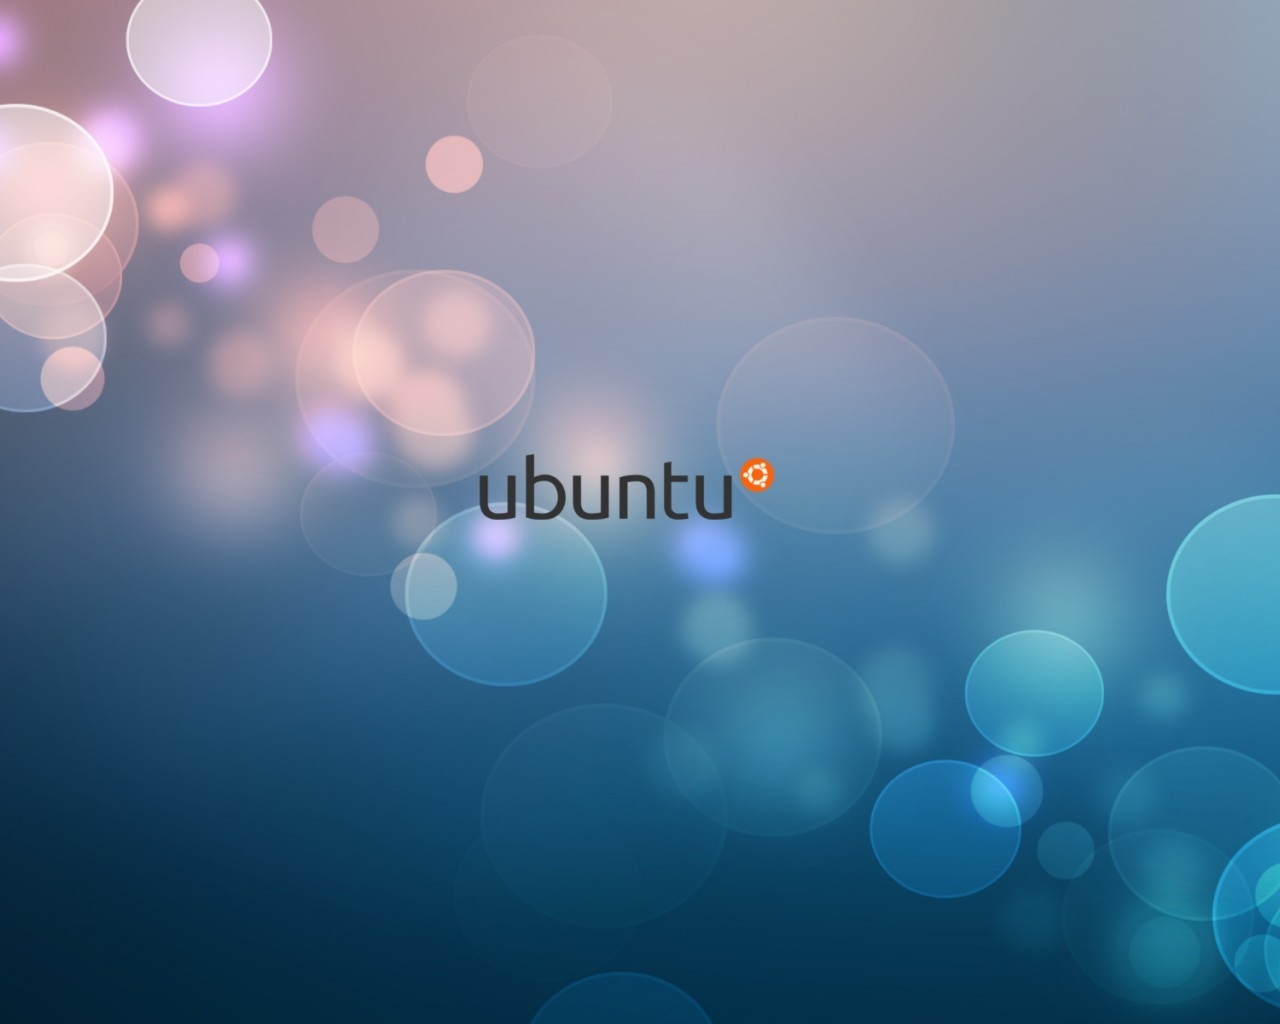 Ubuntu Minimalistic for 1280 x 1024 resolution